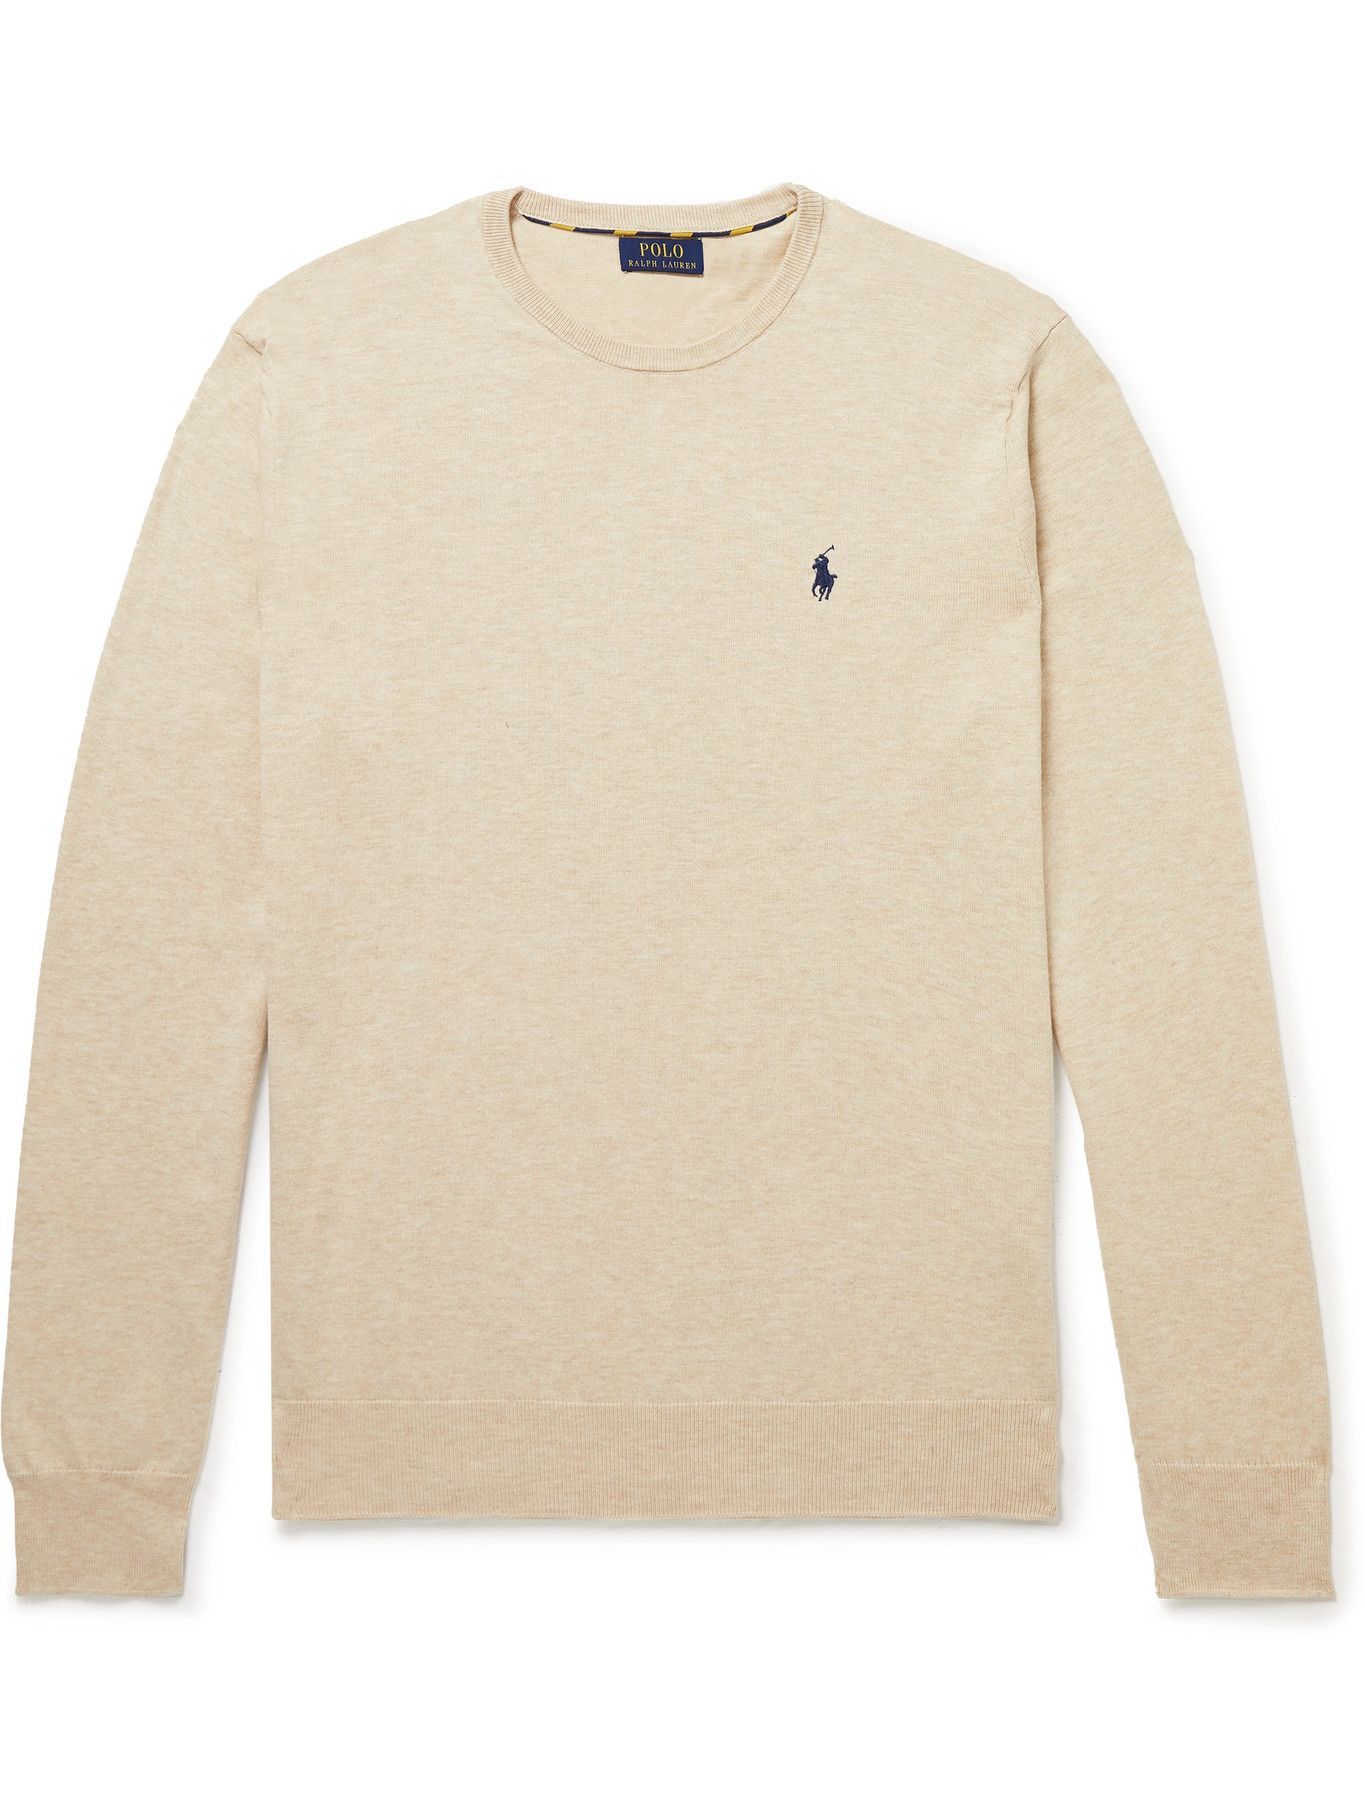 Polo Ralph Lauren - Logo-Embroidered Pima Cotton Sweater - Neutrals ...